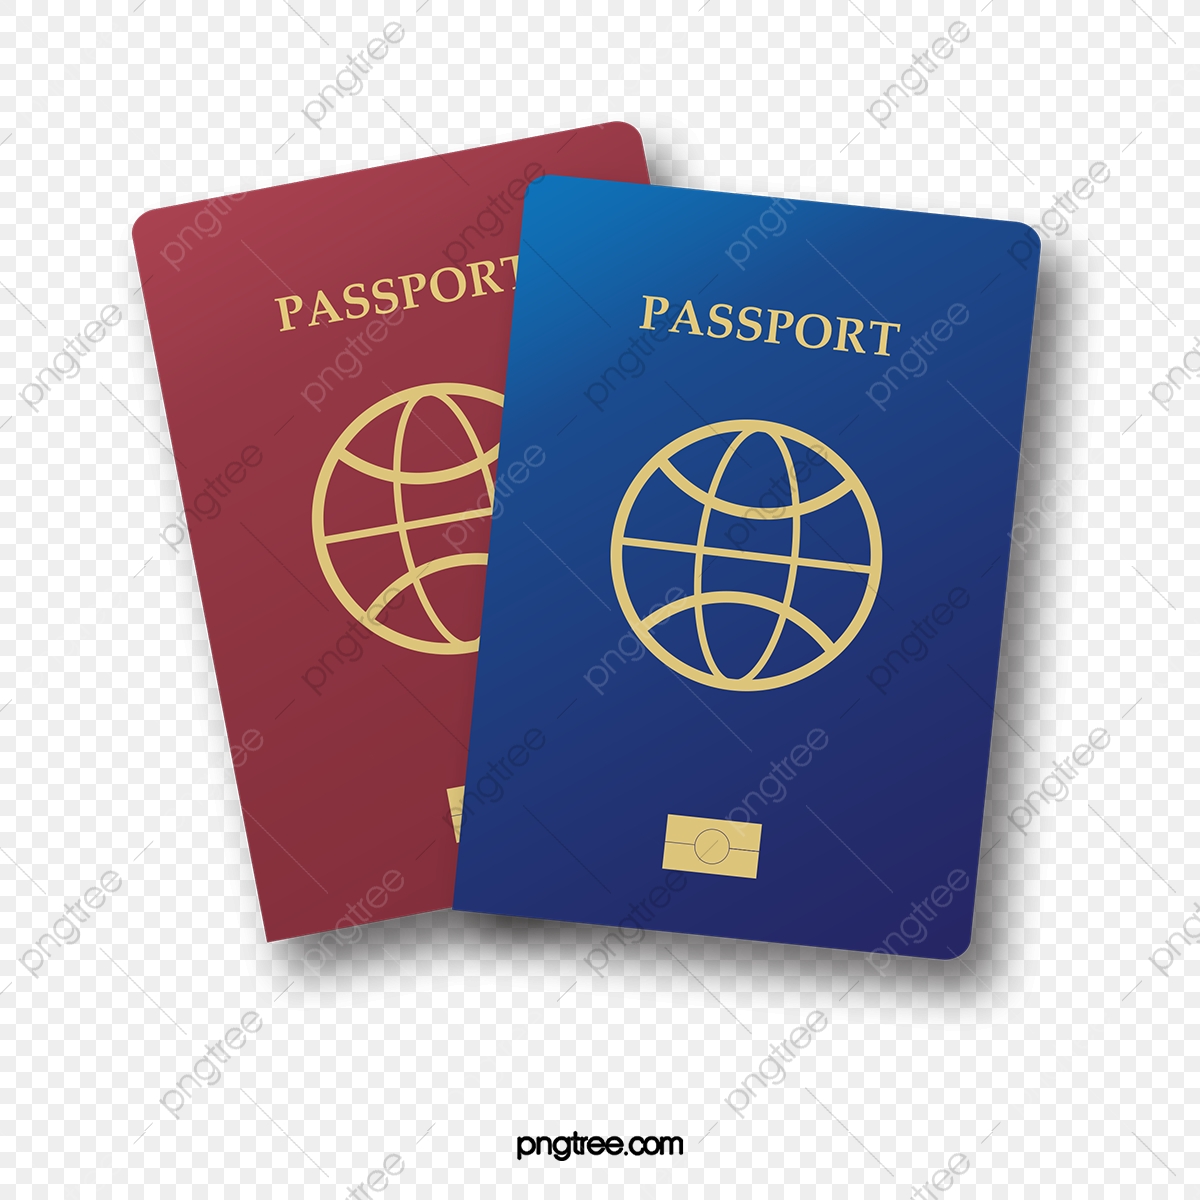 Векторный паспорт